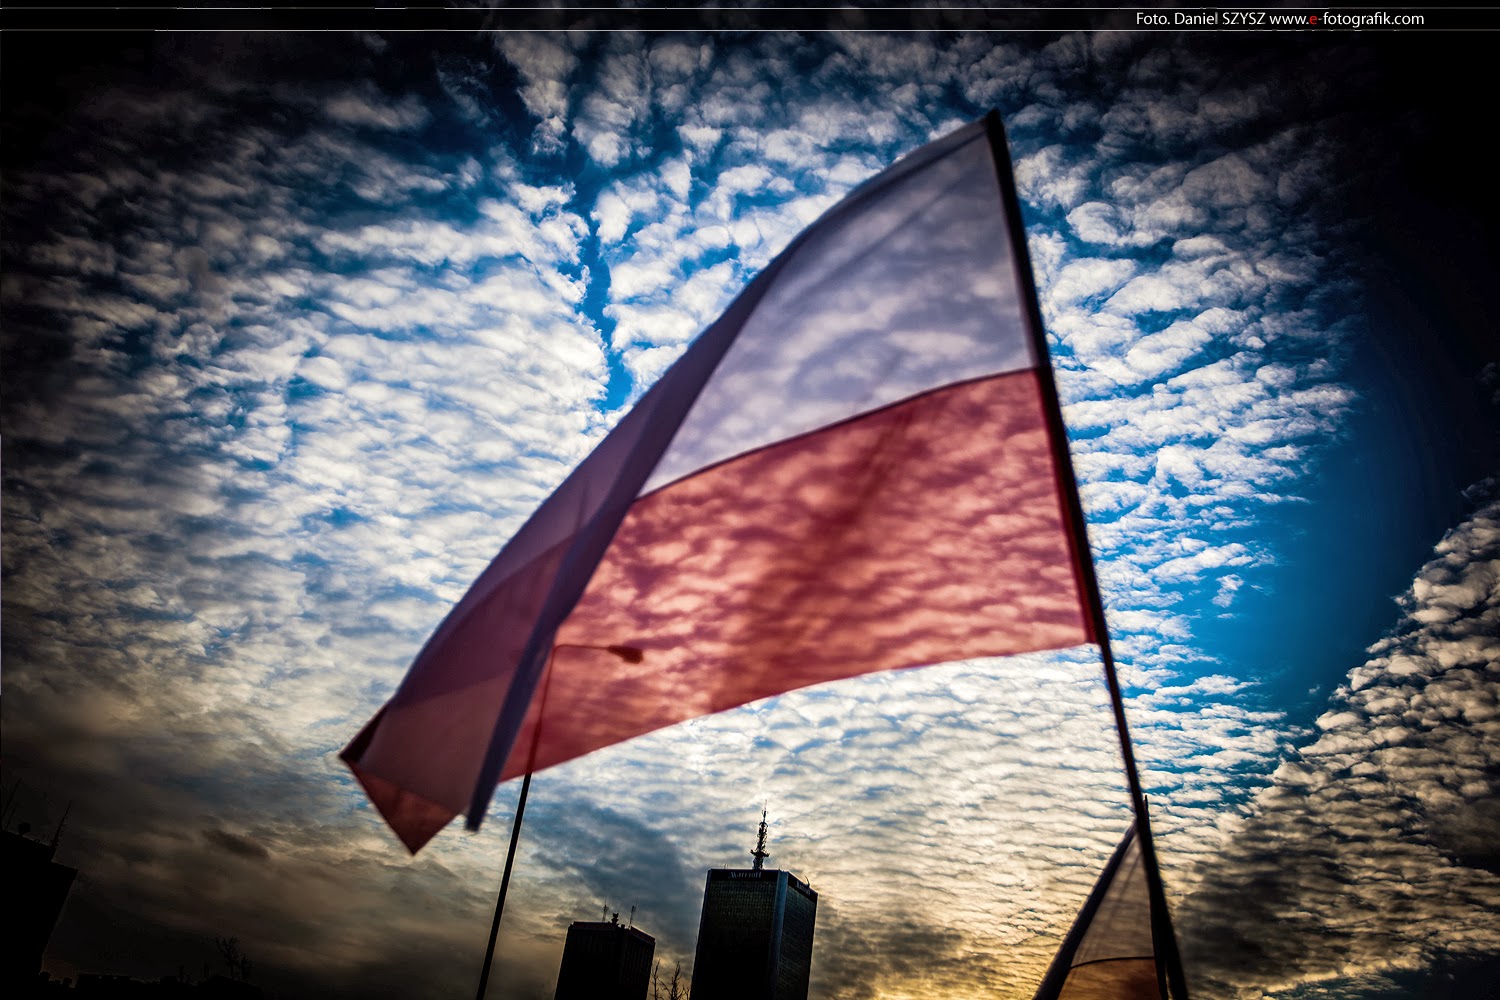 flaga-polska-marszniepodleglosci2013